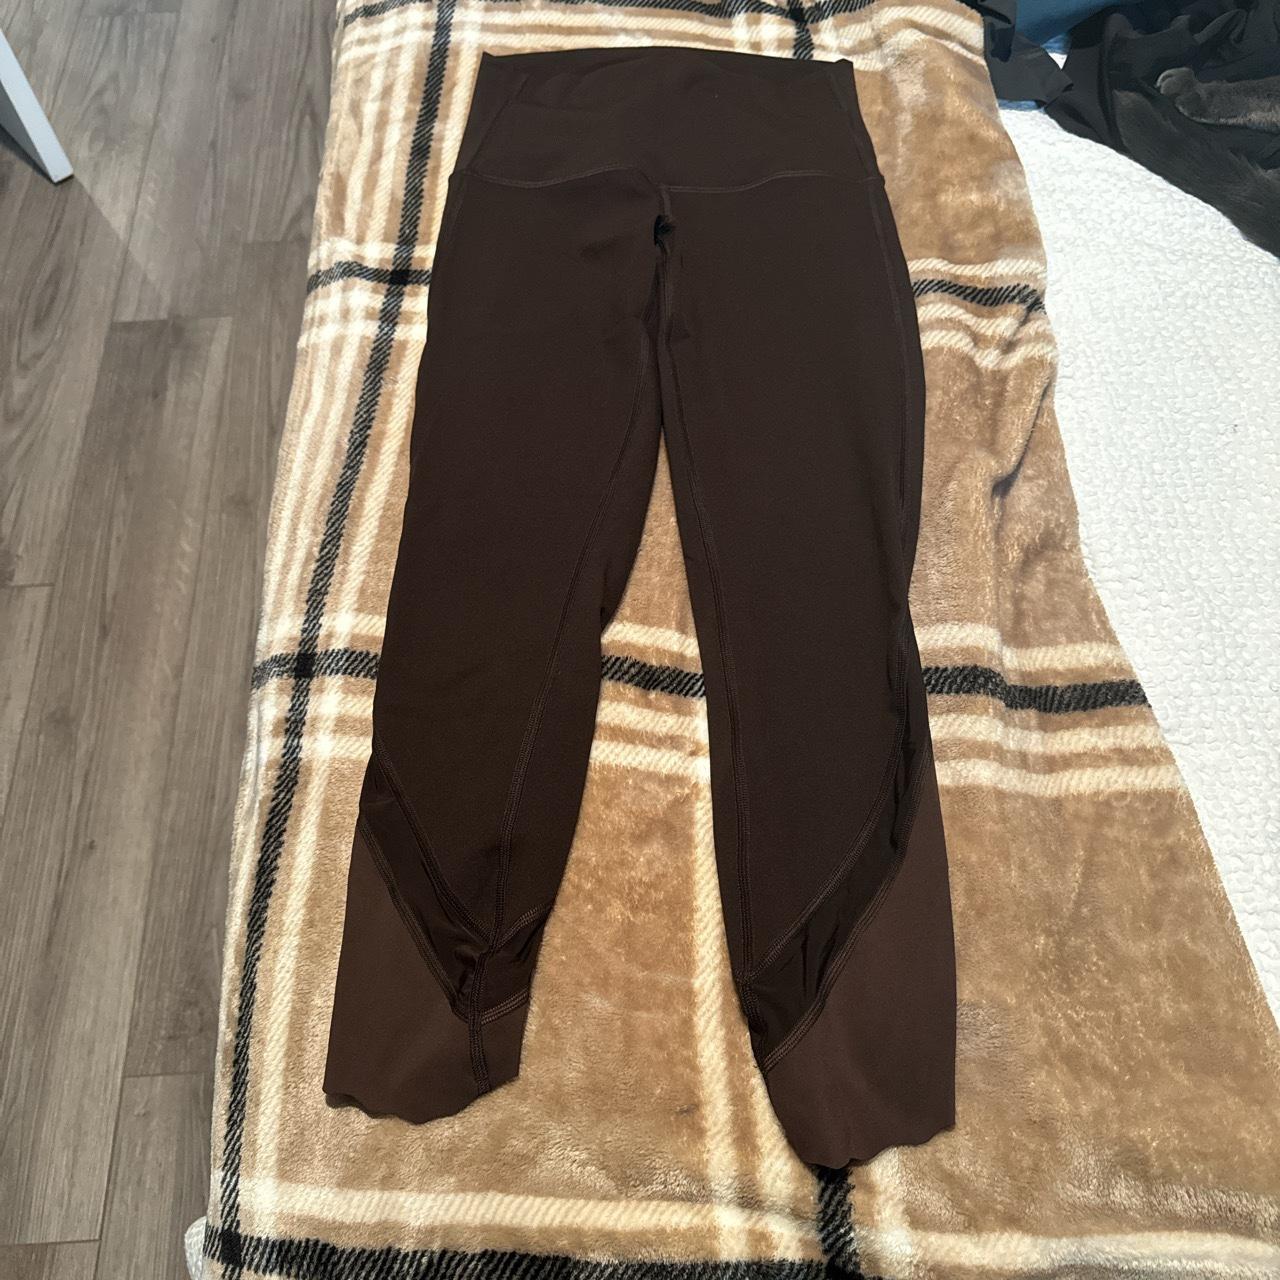 Lululemon brown leggings 23 inches original price